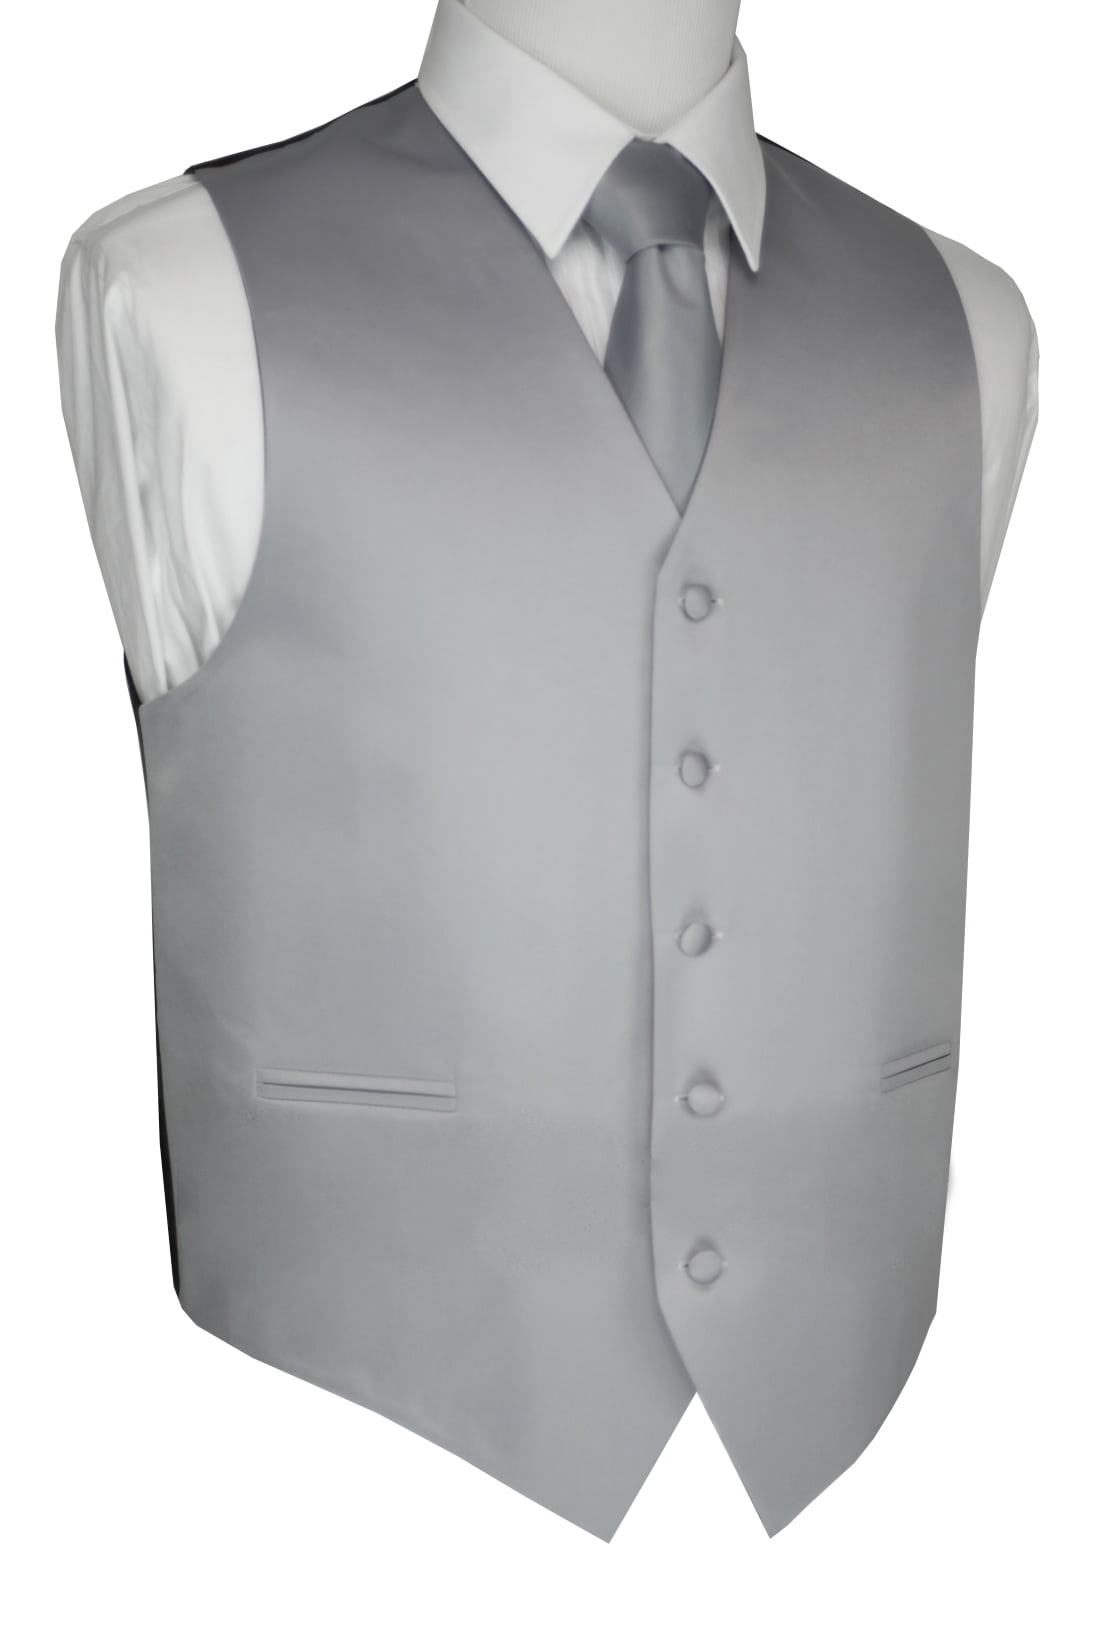 Bowtie & Hankie set prom party Silver New Men's Tuxedo Vest Stripes Necktie 